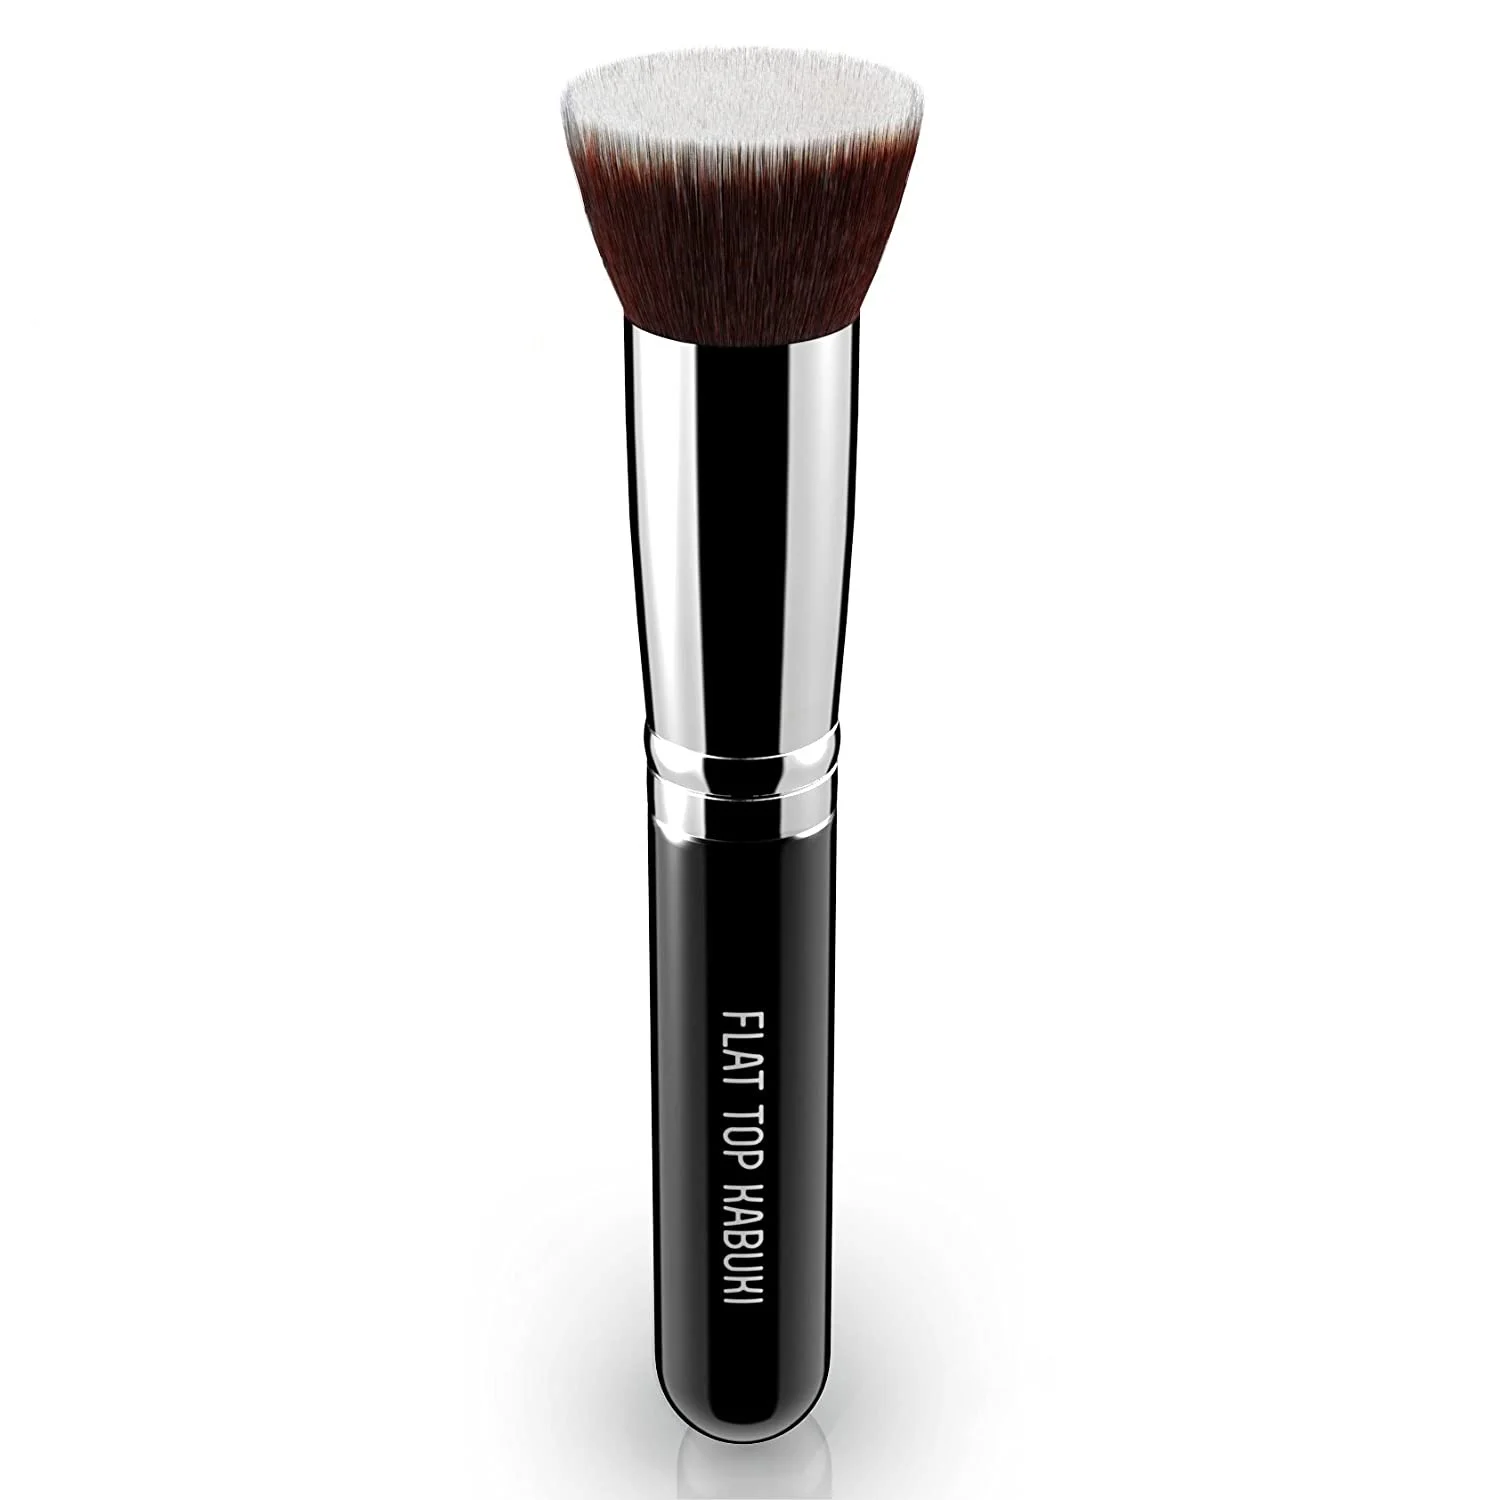 

Amazon Best seller Foundation Makeup brush Flat Top Kabuki Brush for Face, Black handle